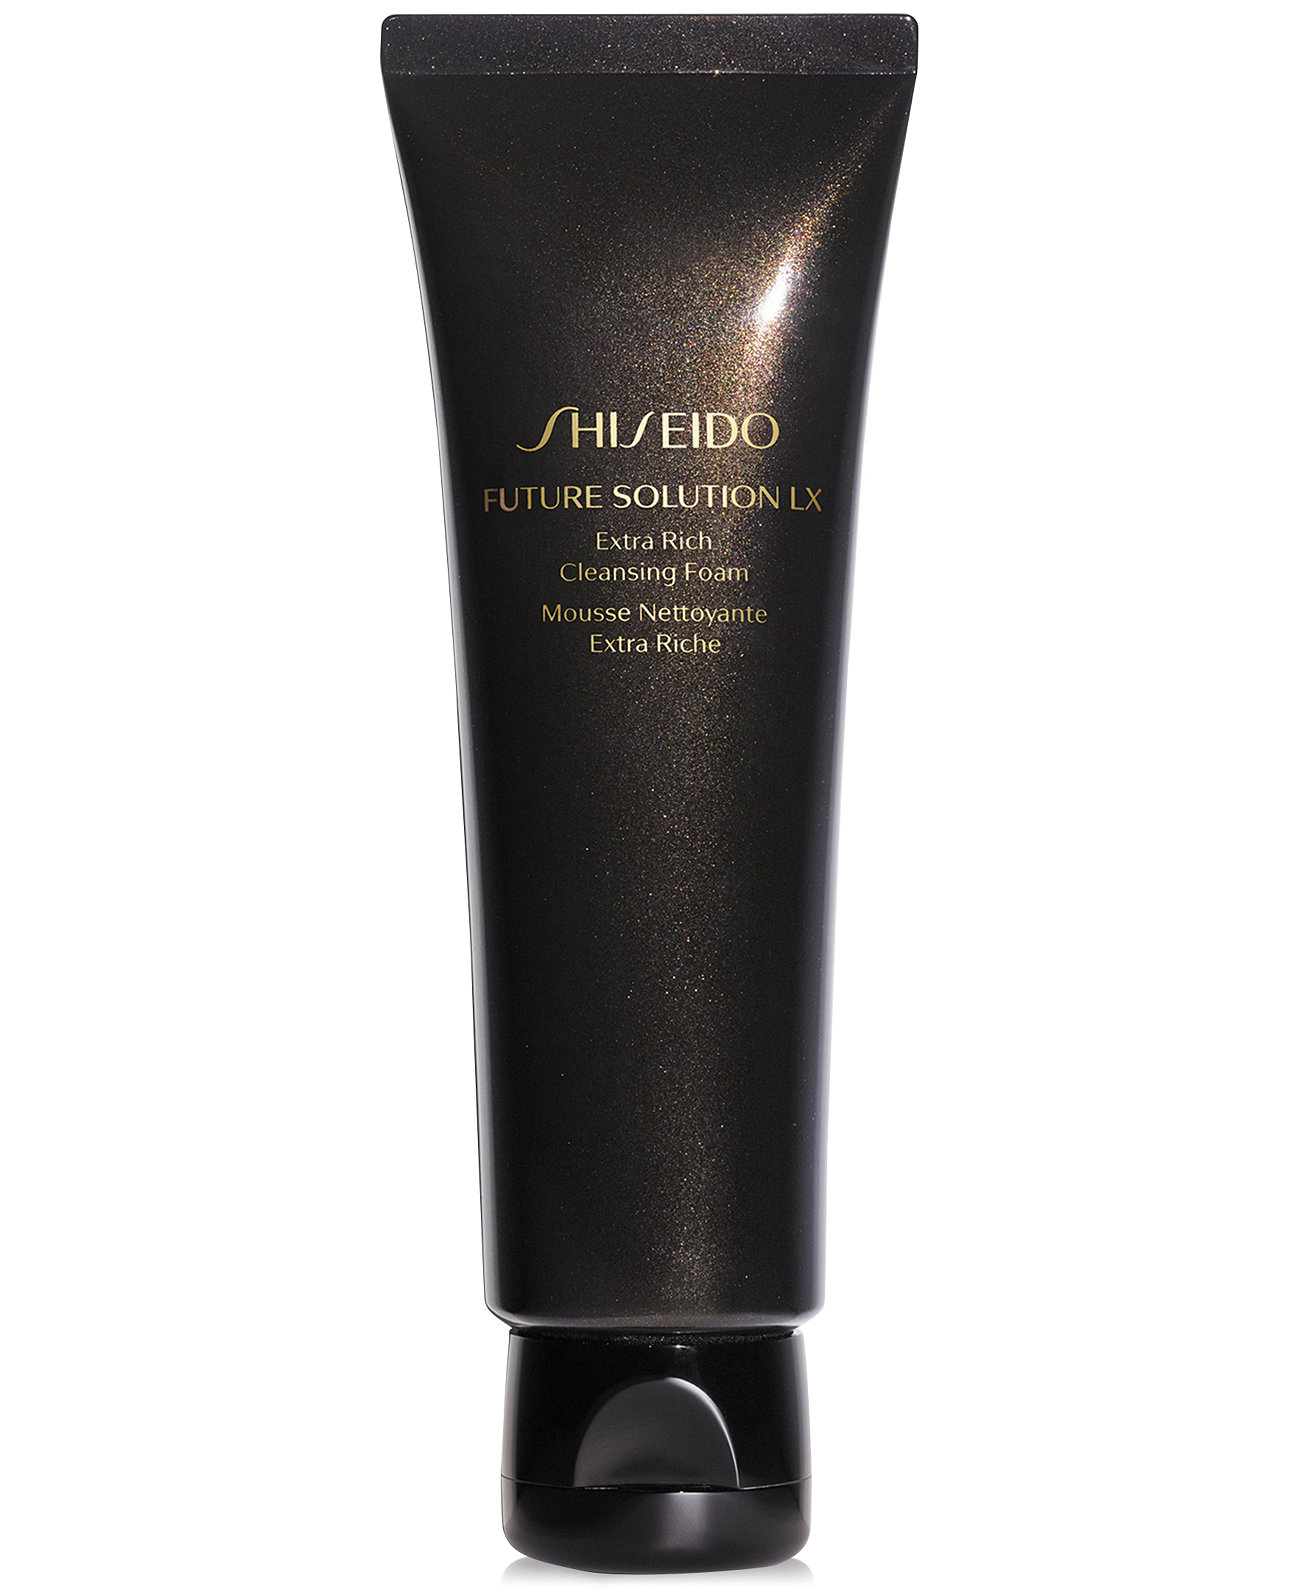 Очищающая пенка Future Solution LX Extra Rich, 4,7 унции. Shiseido